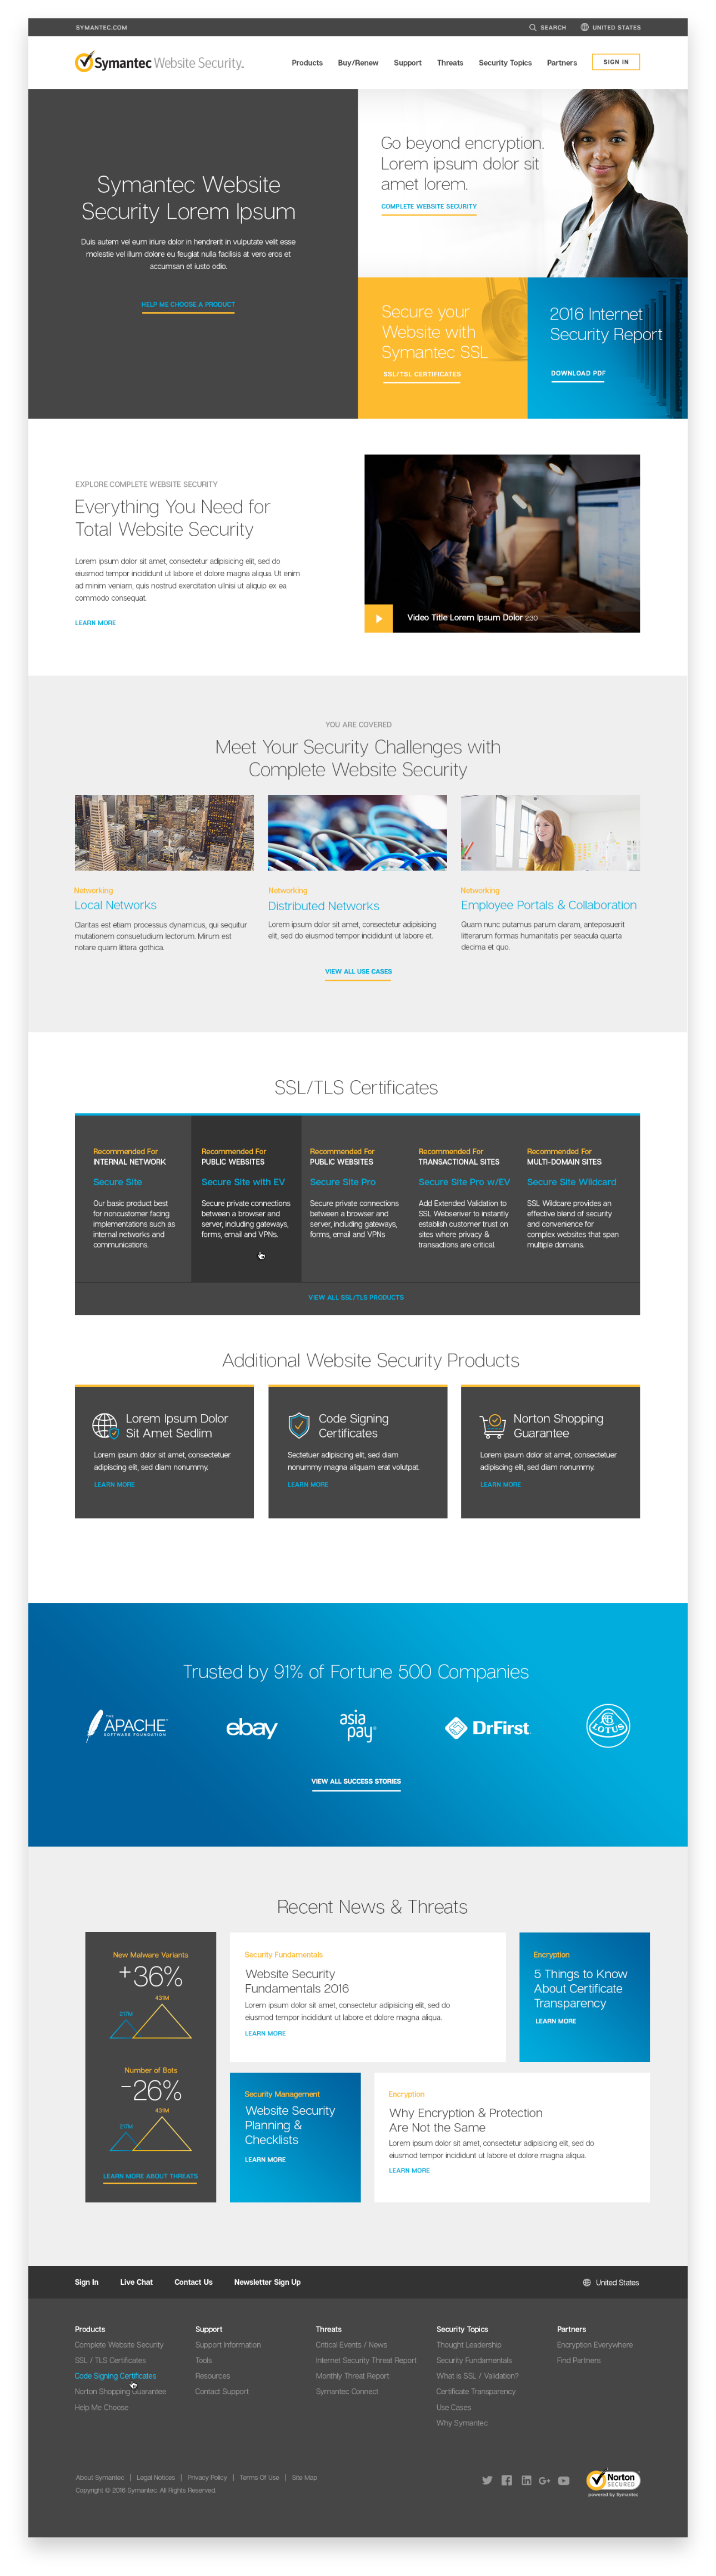 Symantec website screenshot — Homepage